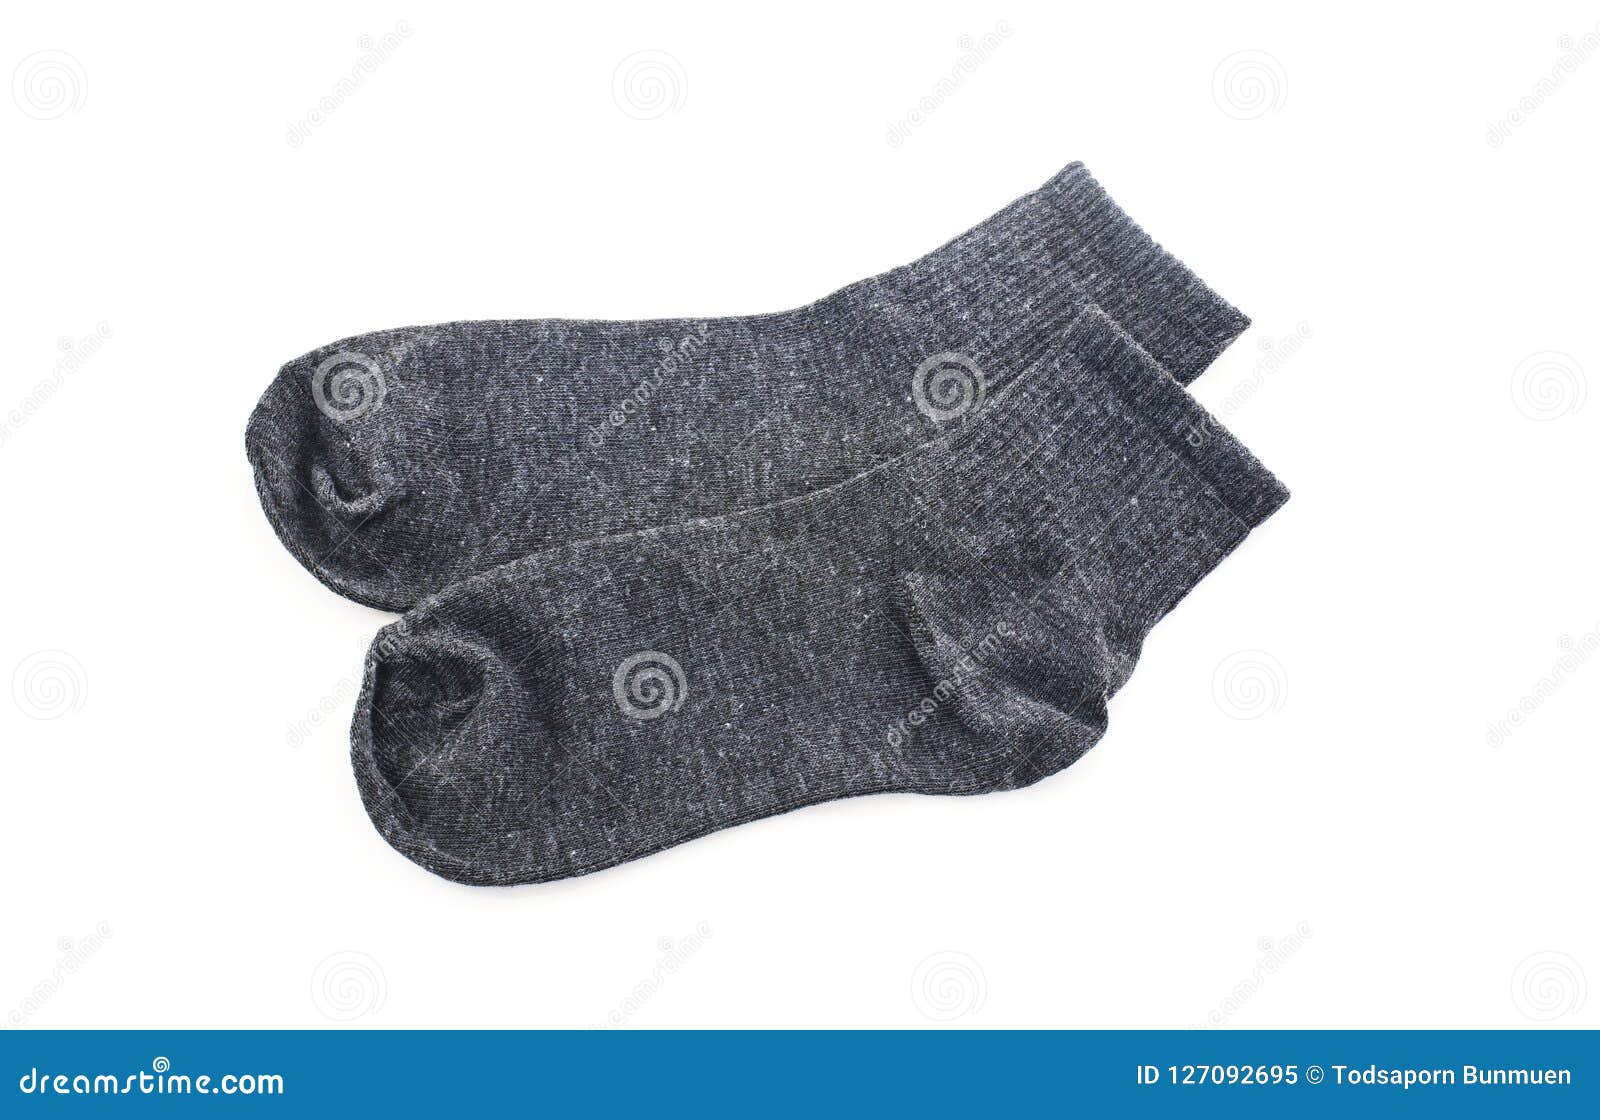 Gray Socks Isolated on White Background Stock Image - Image of male ...